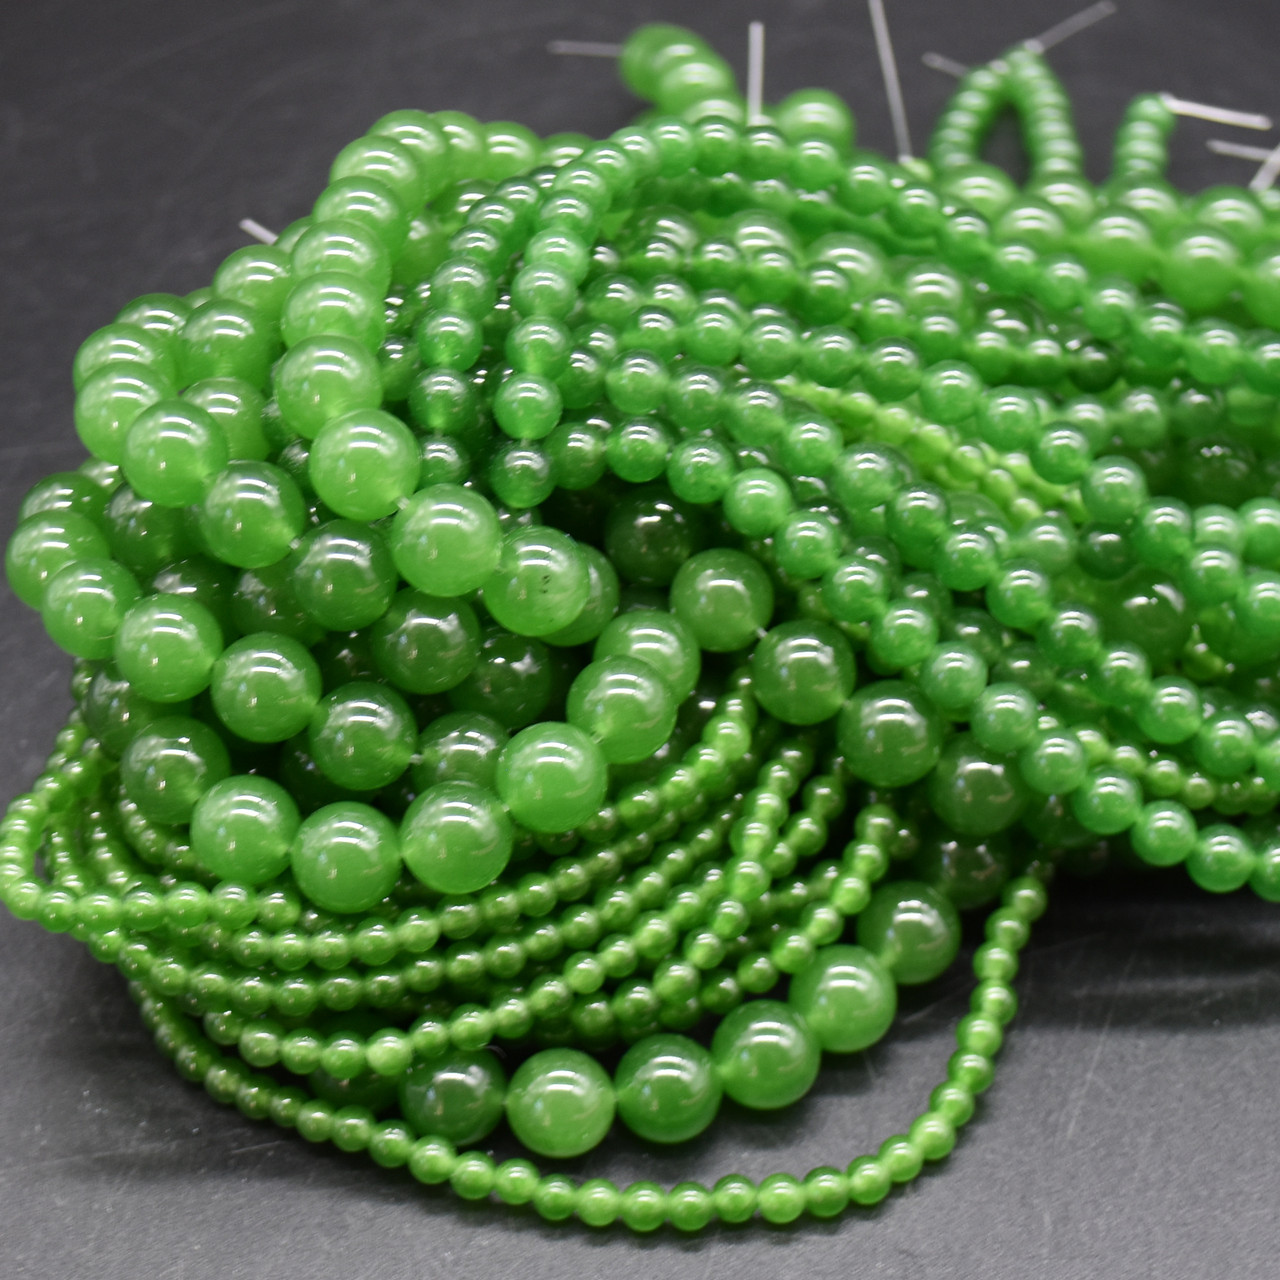 High Quality Dark Green Jade (dyed) Semi-precious Gemstone Round Beads -  4mm, 6mm, 8mm, 10mm sizes 